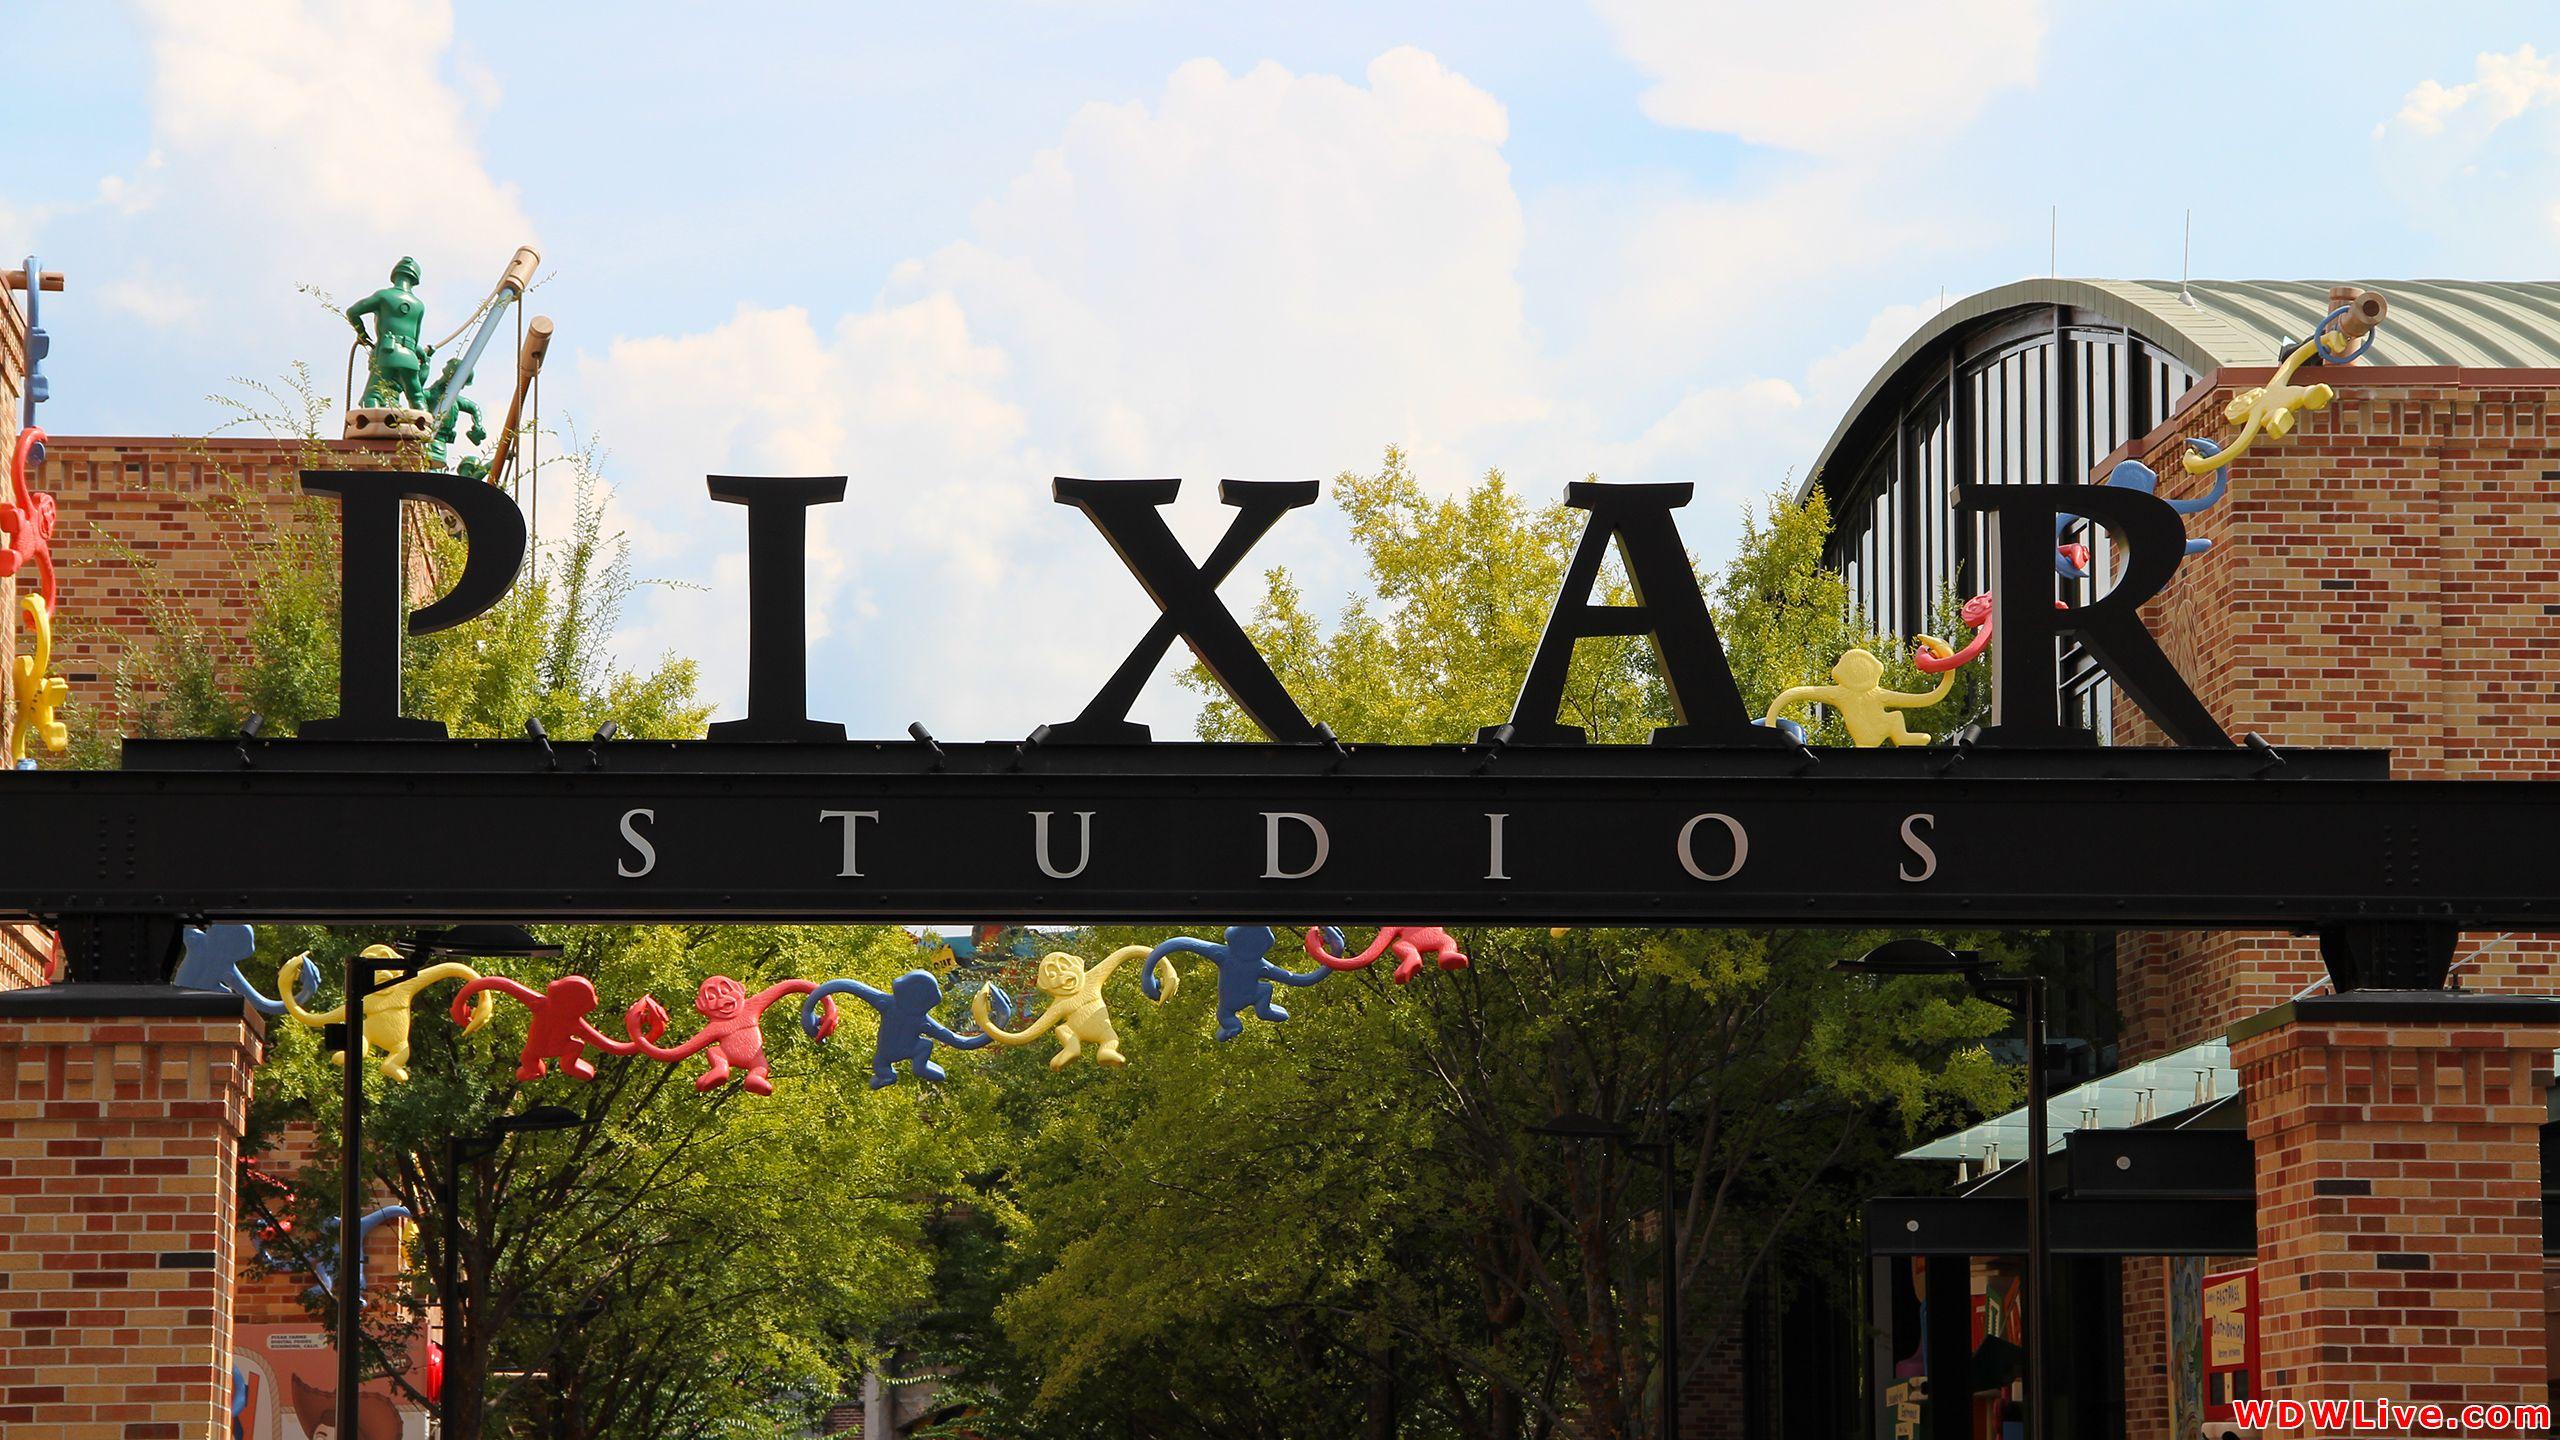 Pixar Place: Pixar Place entrance arch sign at Disney's Hollywood